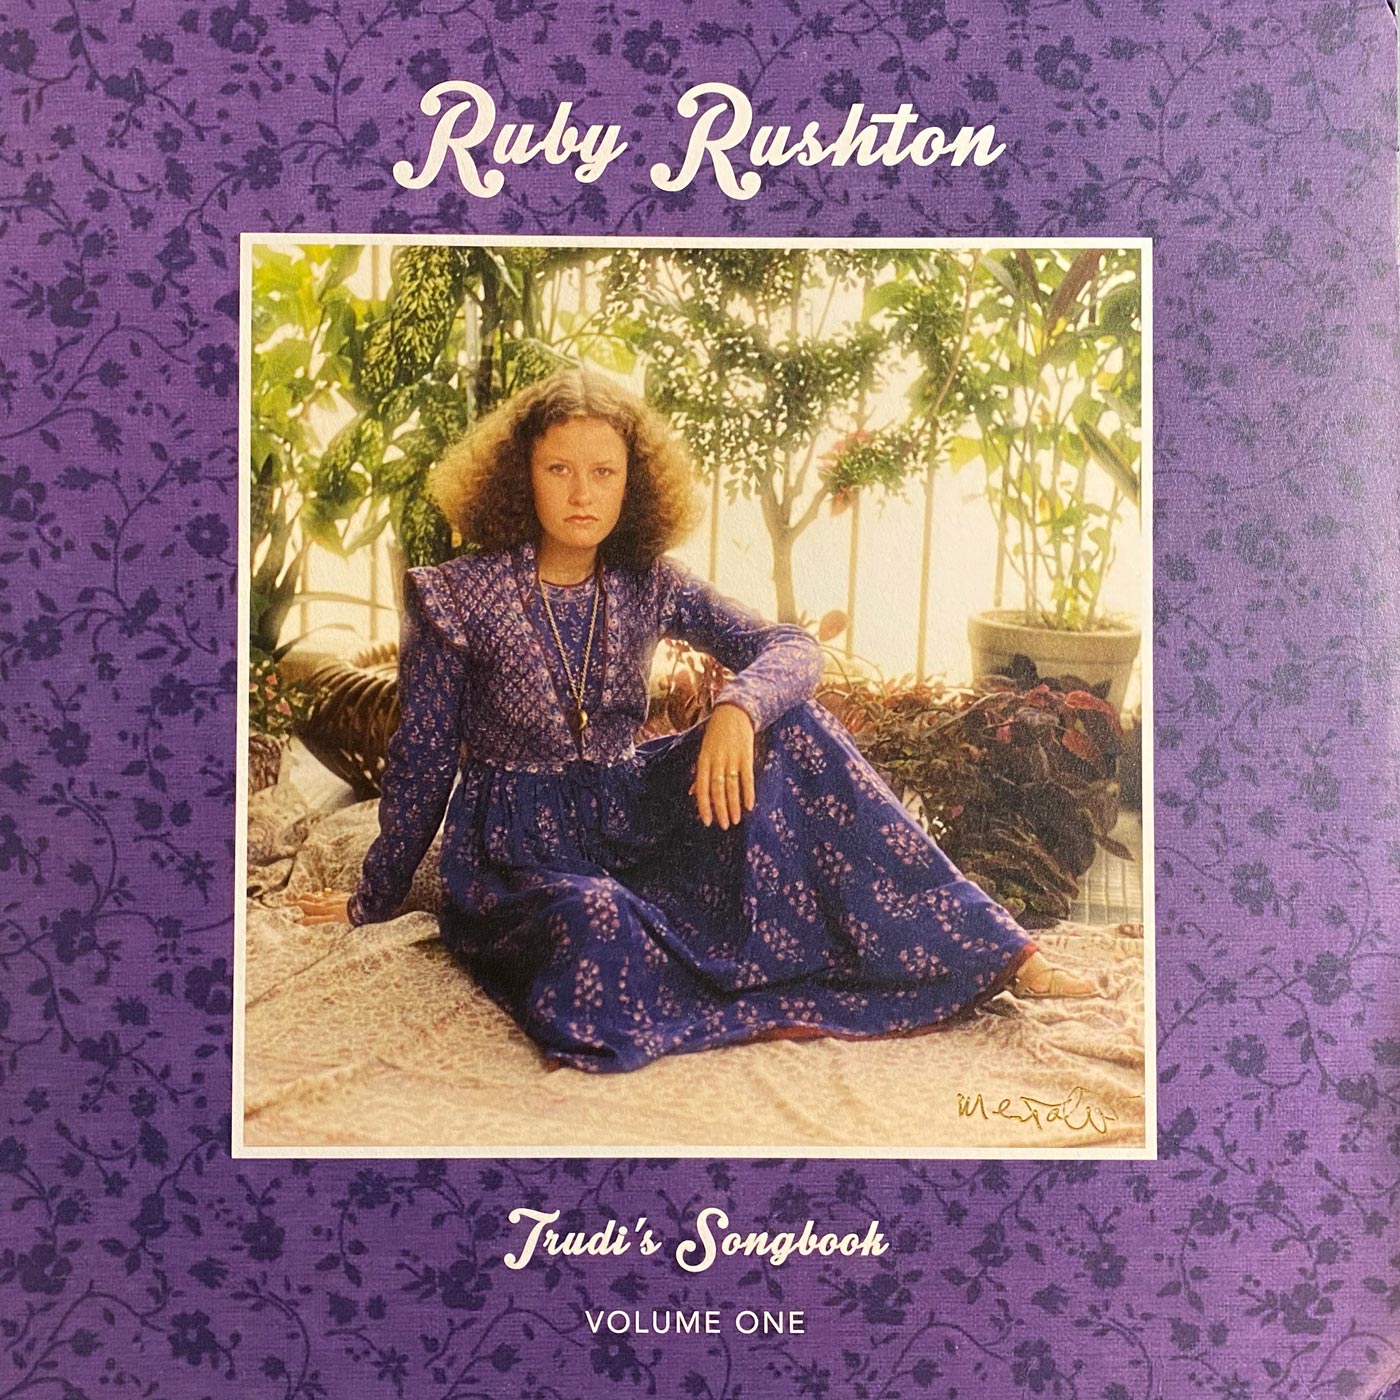 Ruby Rushton - Trudi's Songbook Volume One